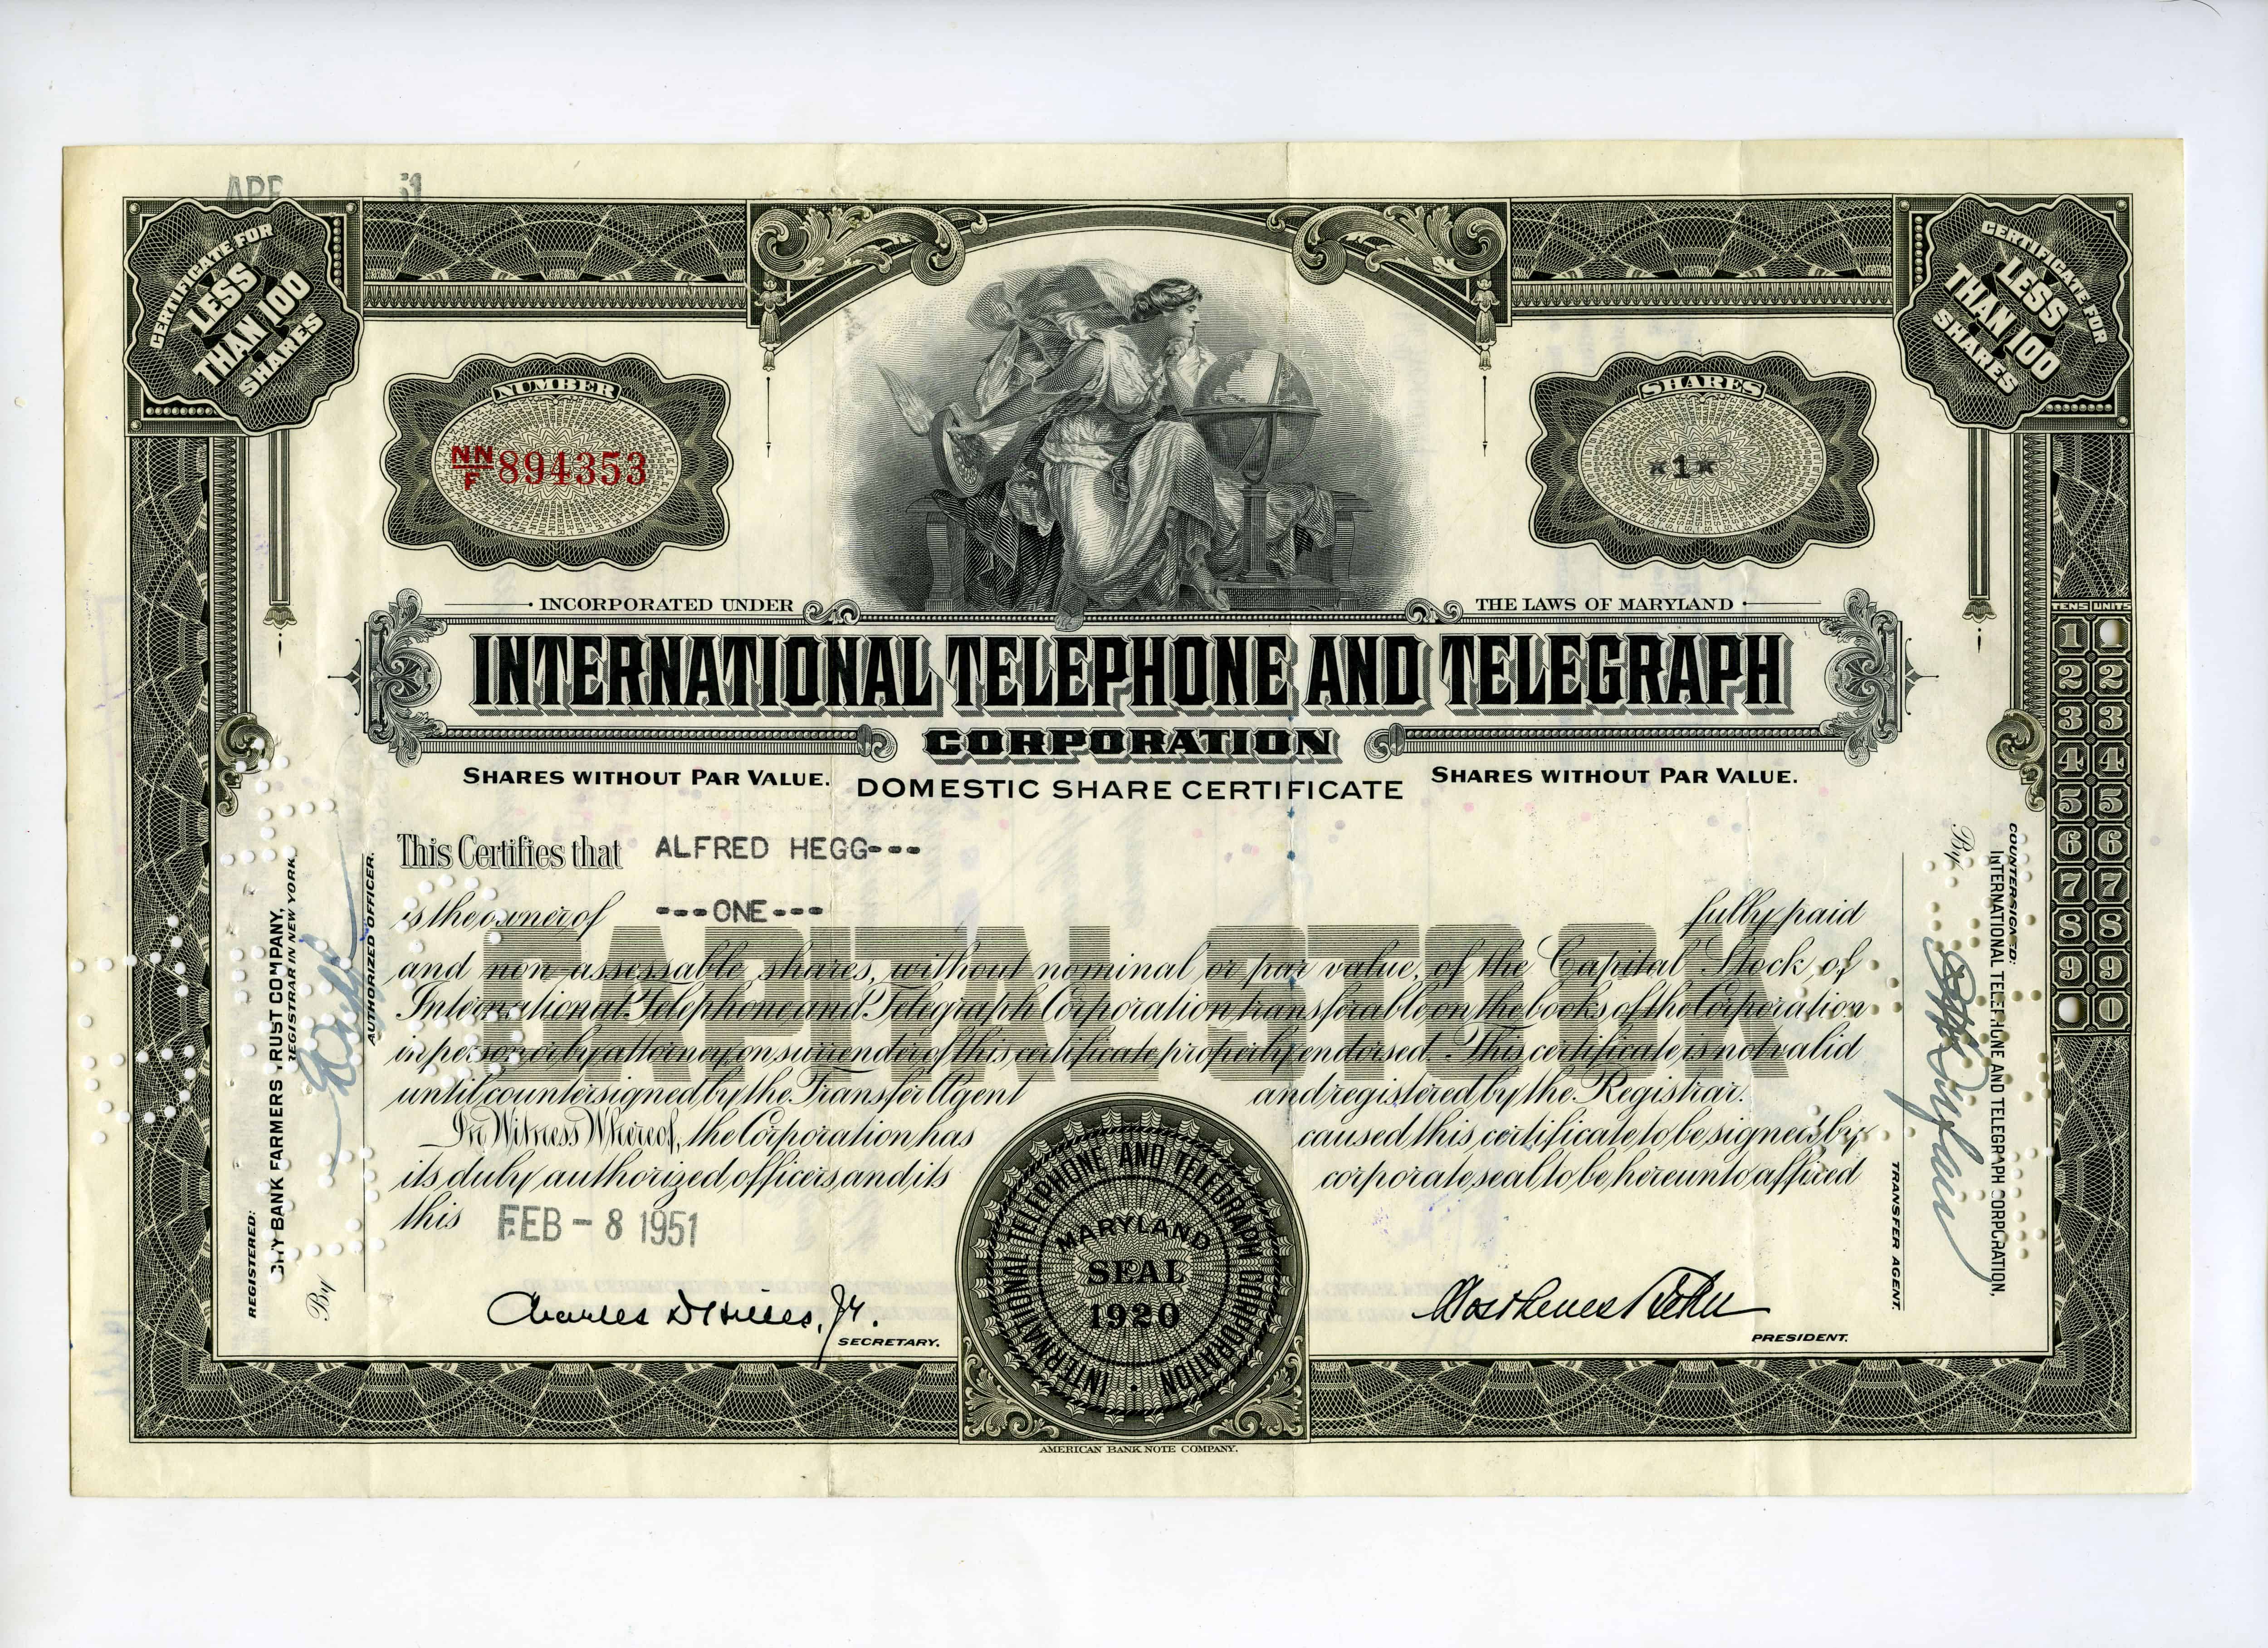 1 akcja spółki International Telephone and Telegraph Corporation z dnia 8 lutego 1951 roku